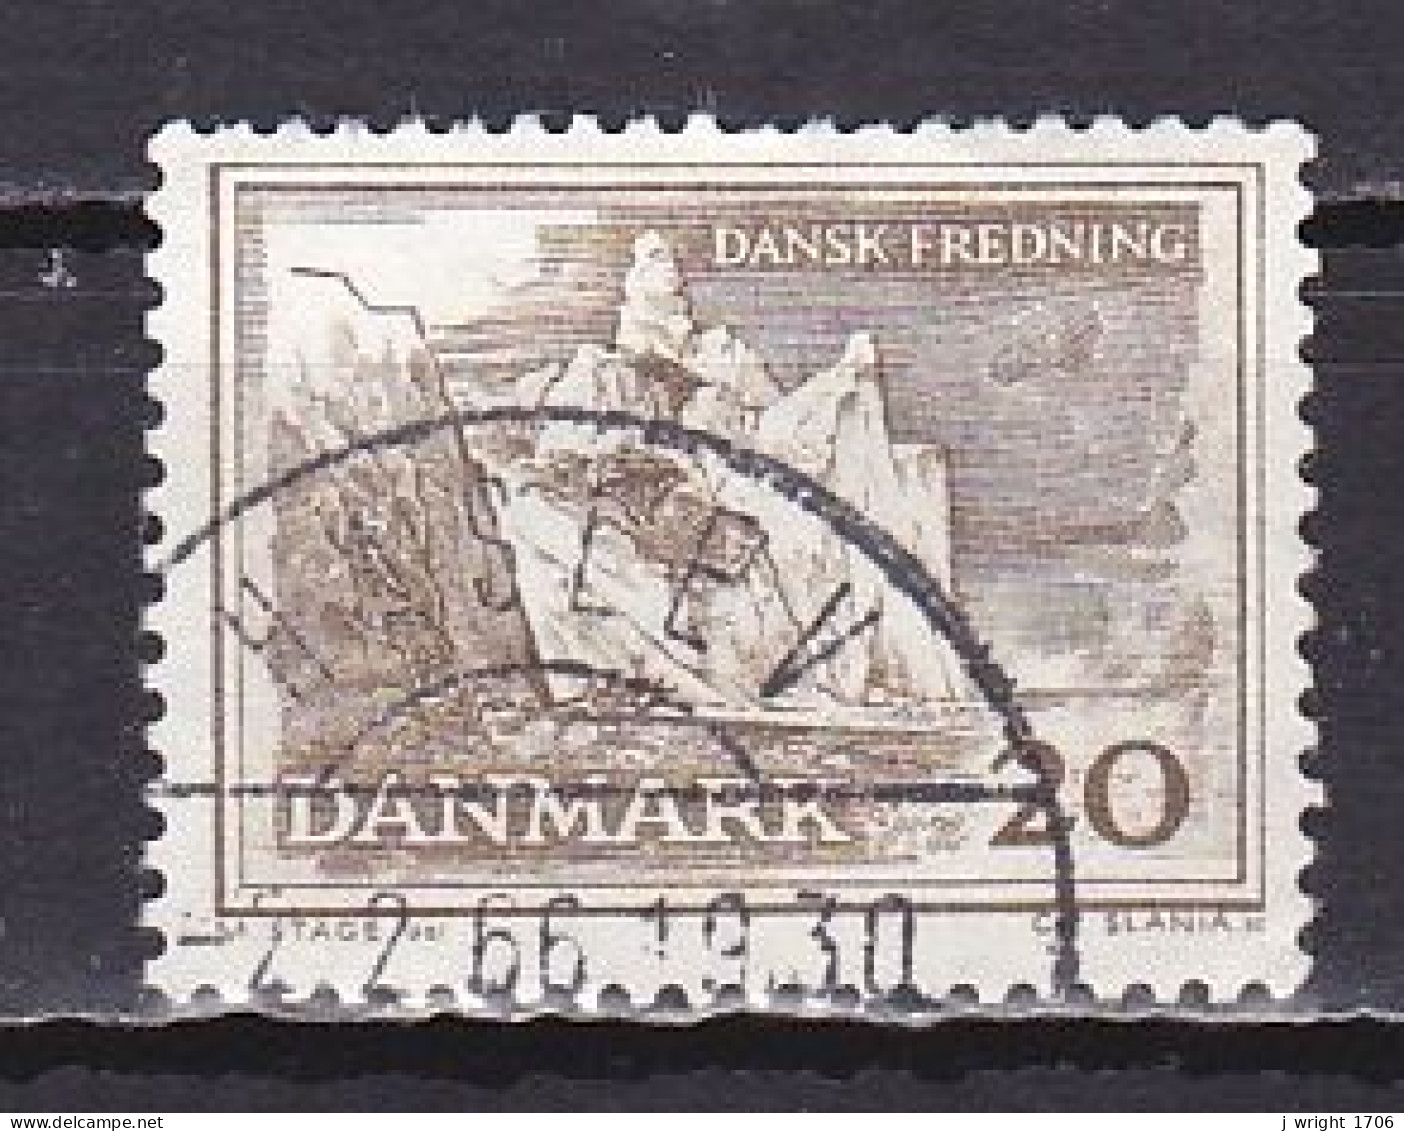 Denmark, 1962, Natural Preservation/Møn Cliffs, 20ø, USED - Gebruikt